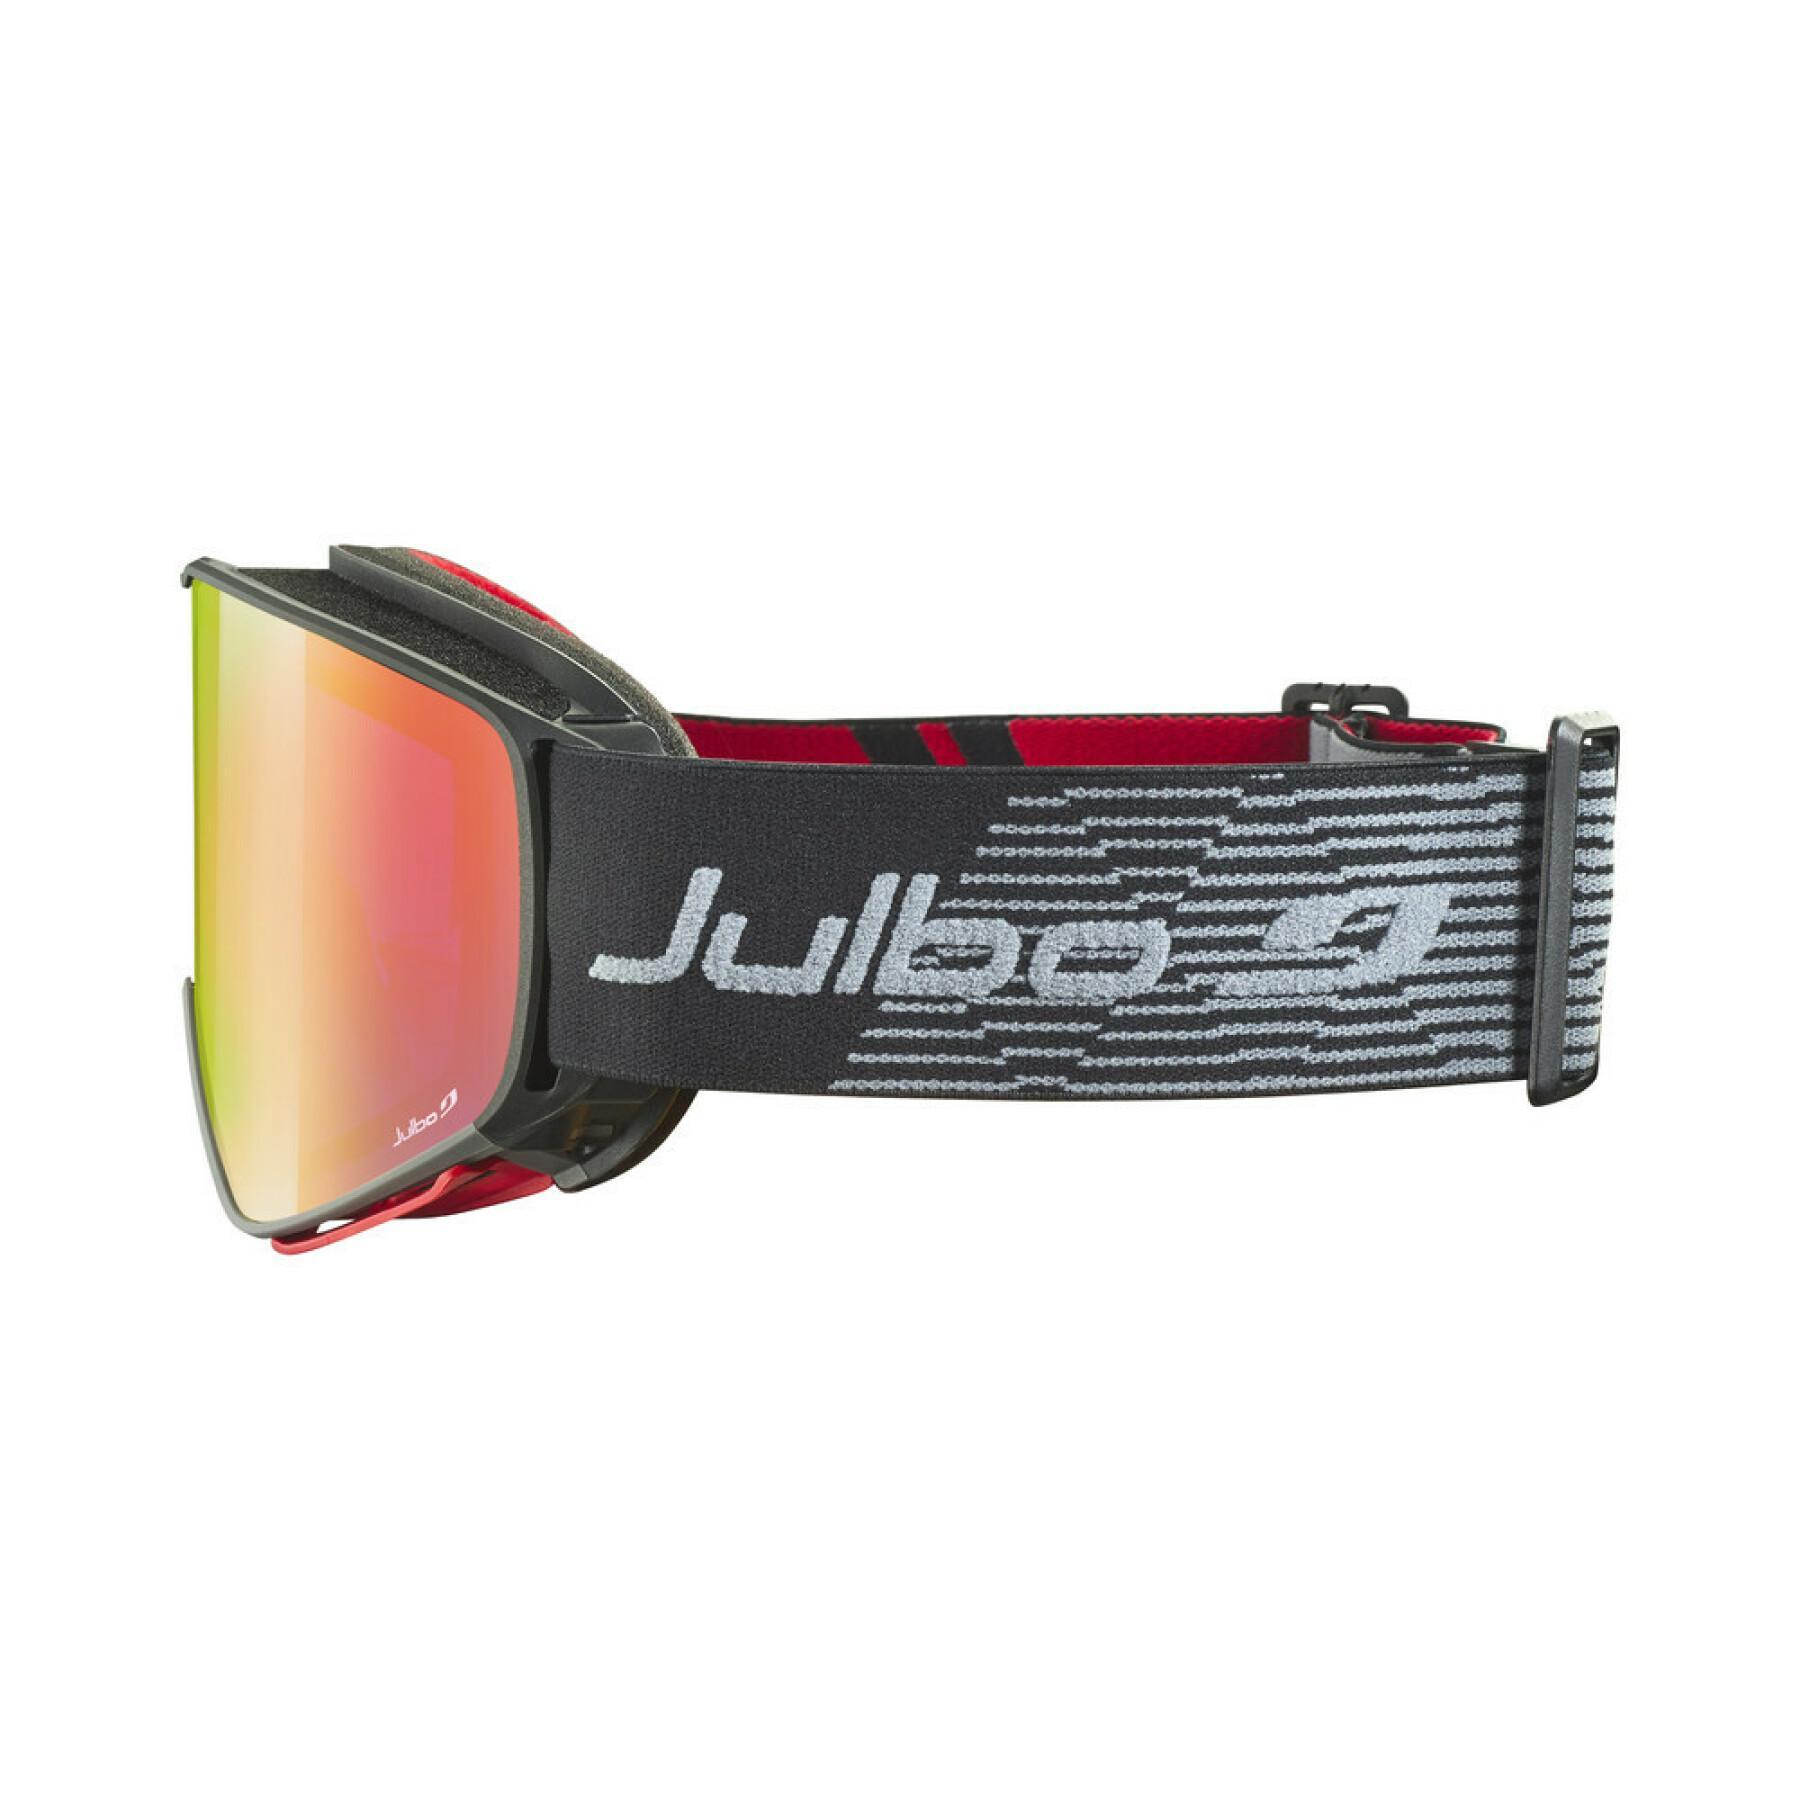 Masque de ski contraste élévé Julbo Quickshift OTG reactiv 1-3 High Contrast